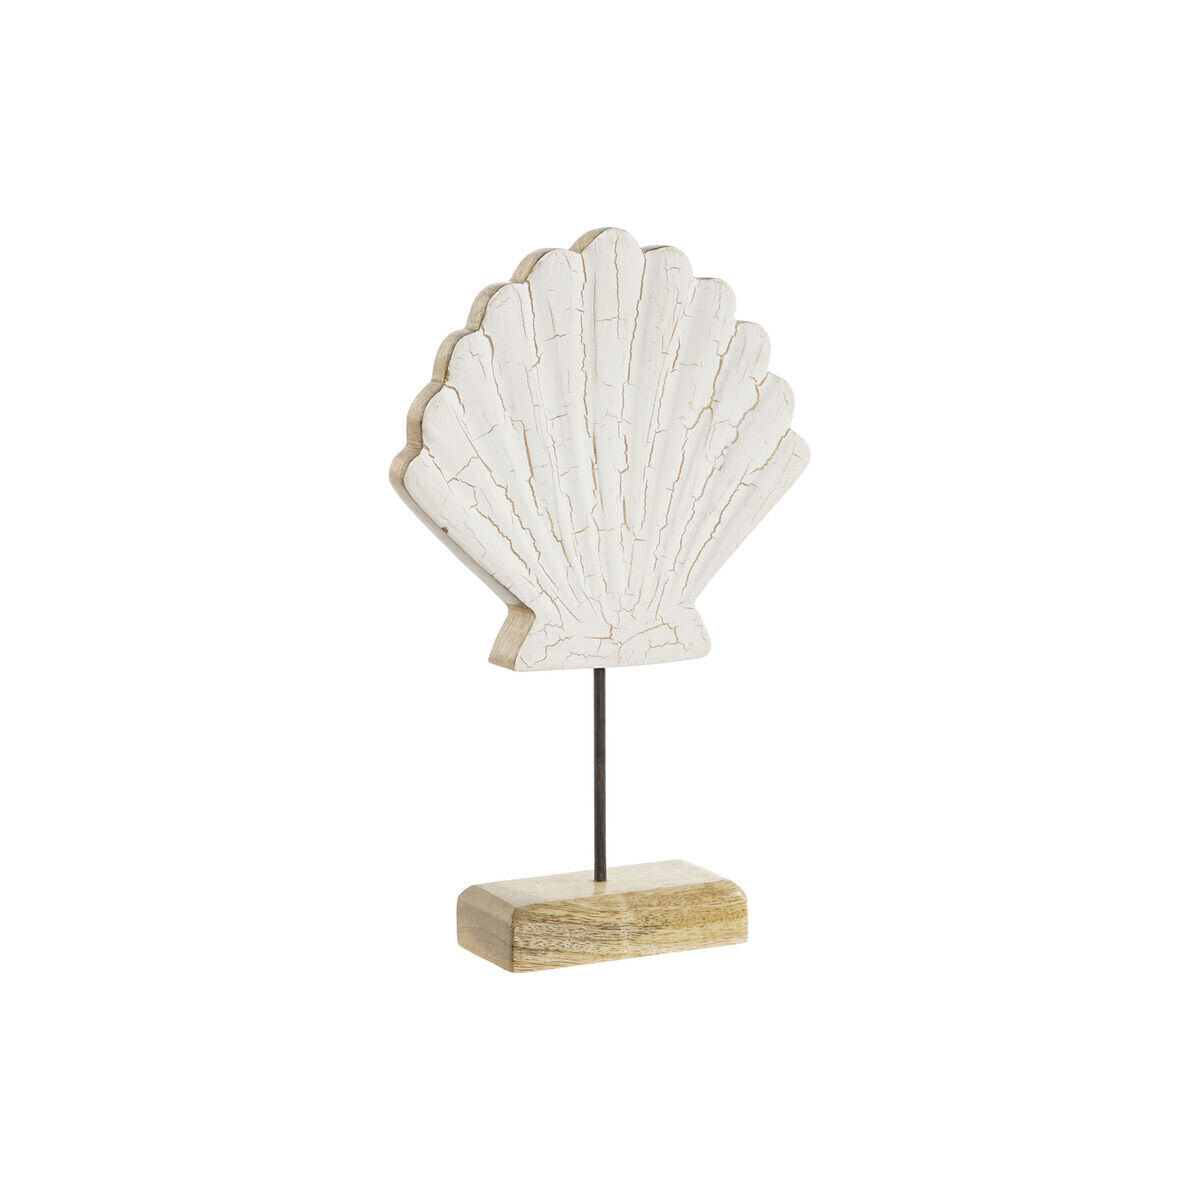 Decorative Figure Home ESPRIT White Natural Shell Mediterranean 18 x 5 x 28 cm